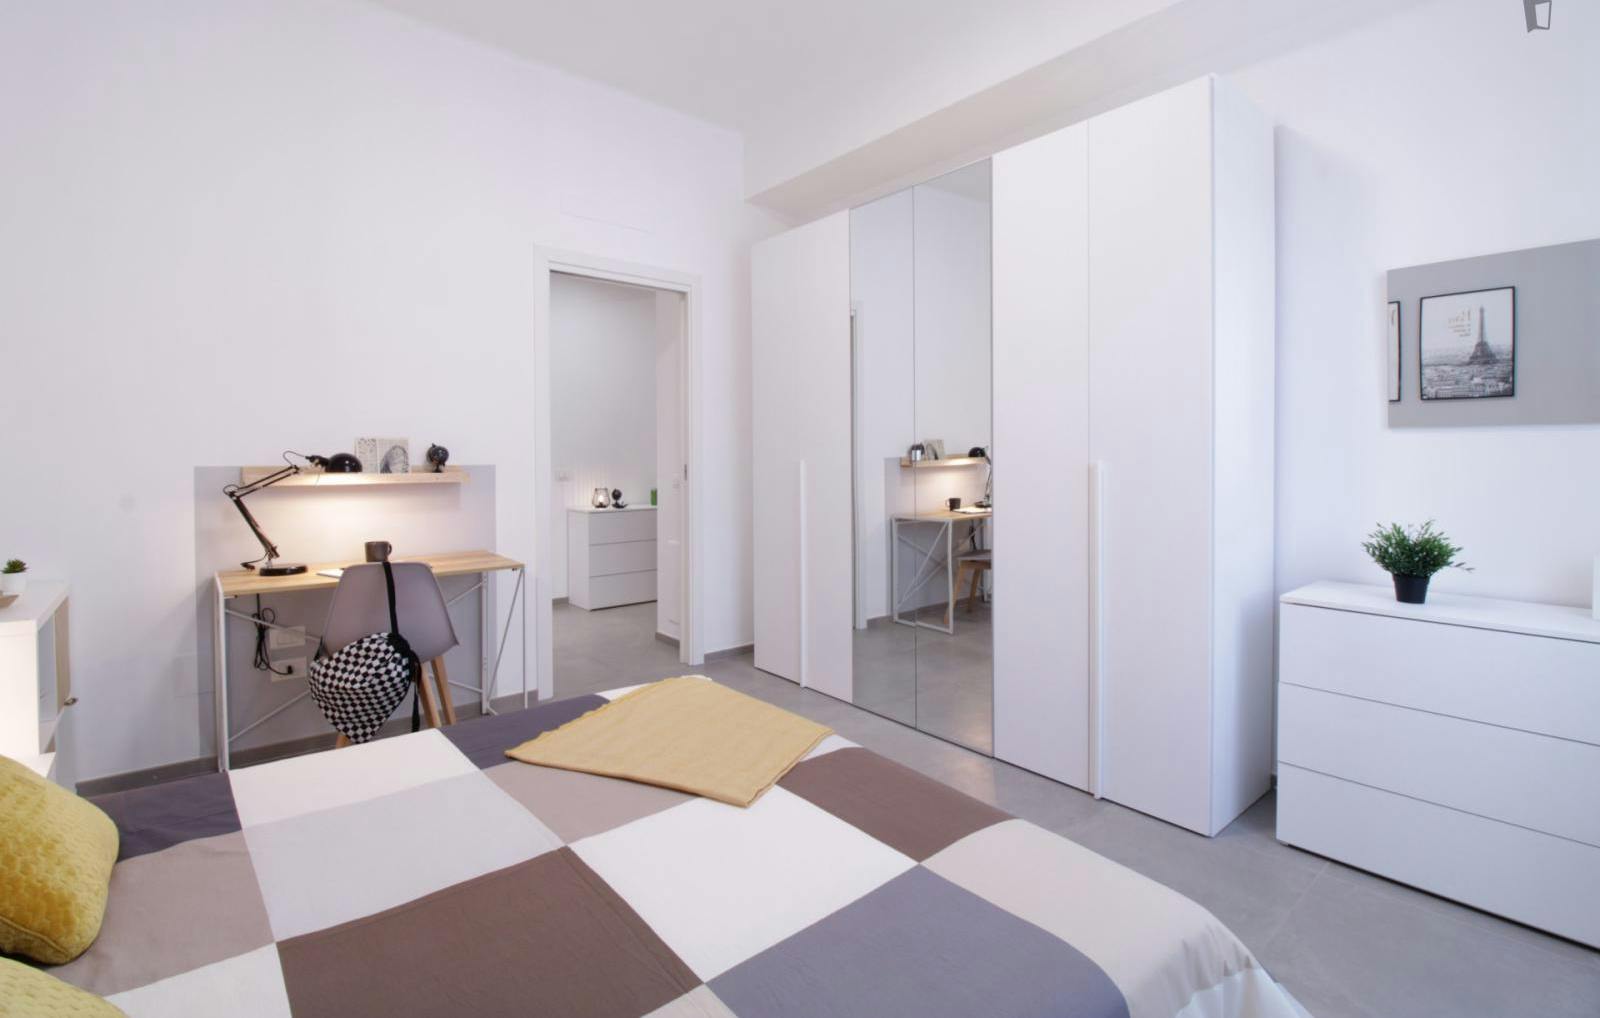 Inviting double bedroom near brescia station